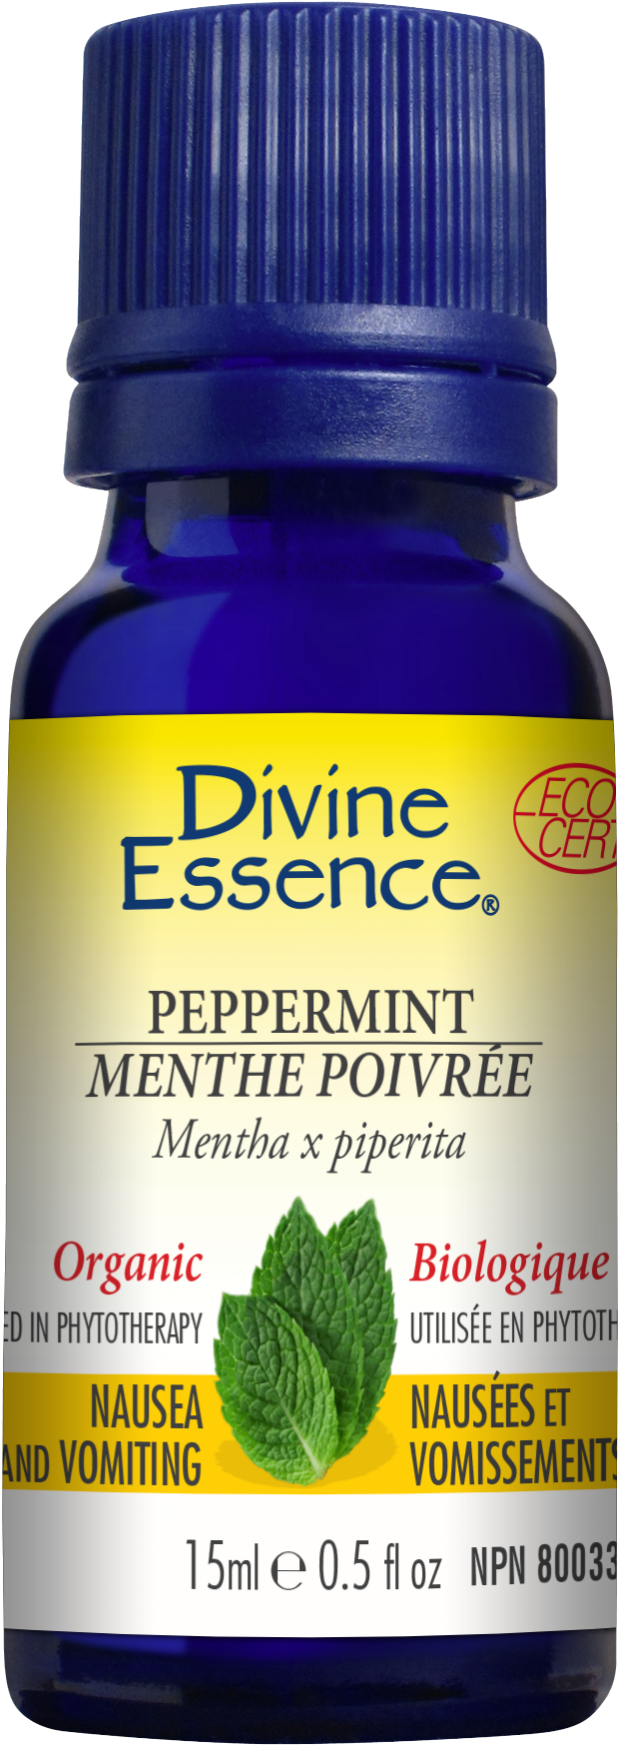 Divine Essence Peppermint Oil Bottle PNG